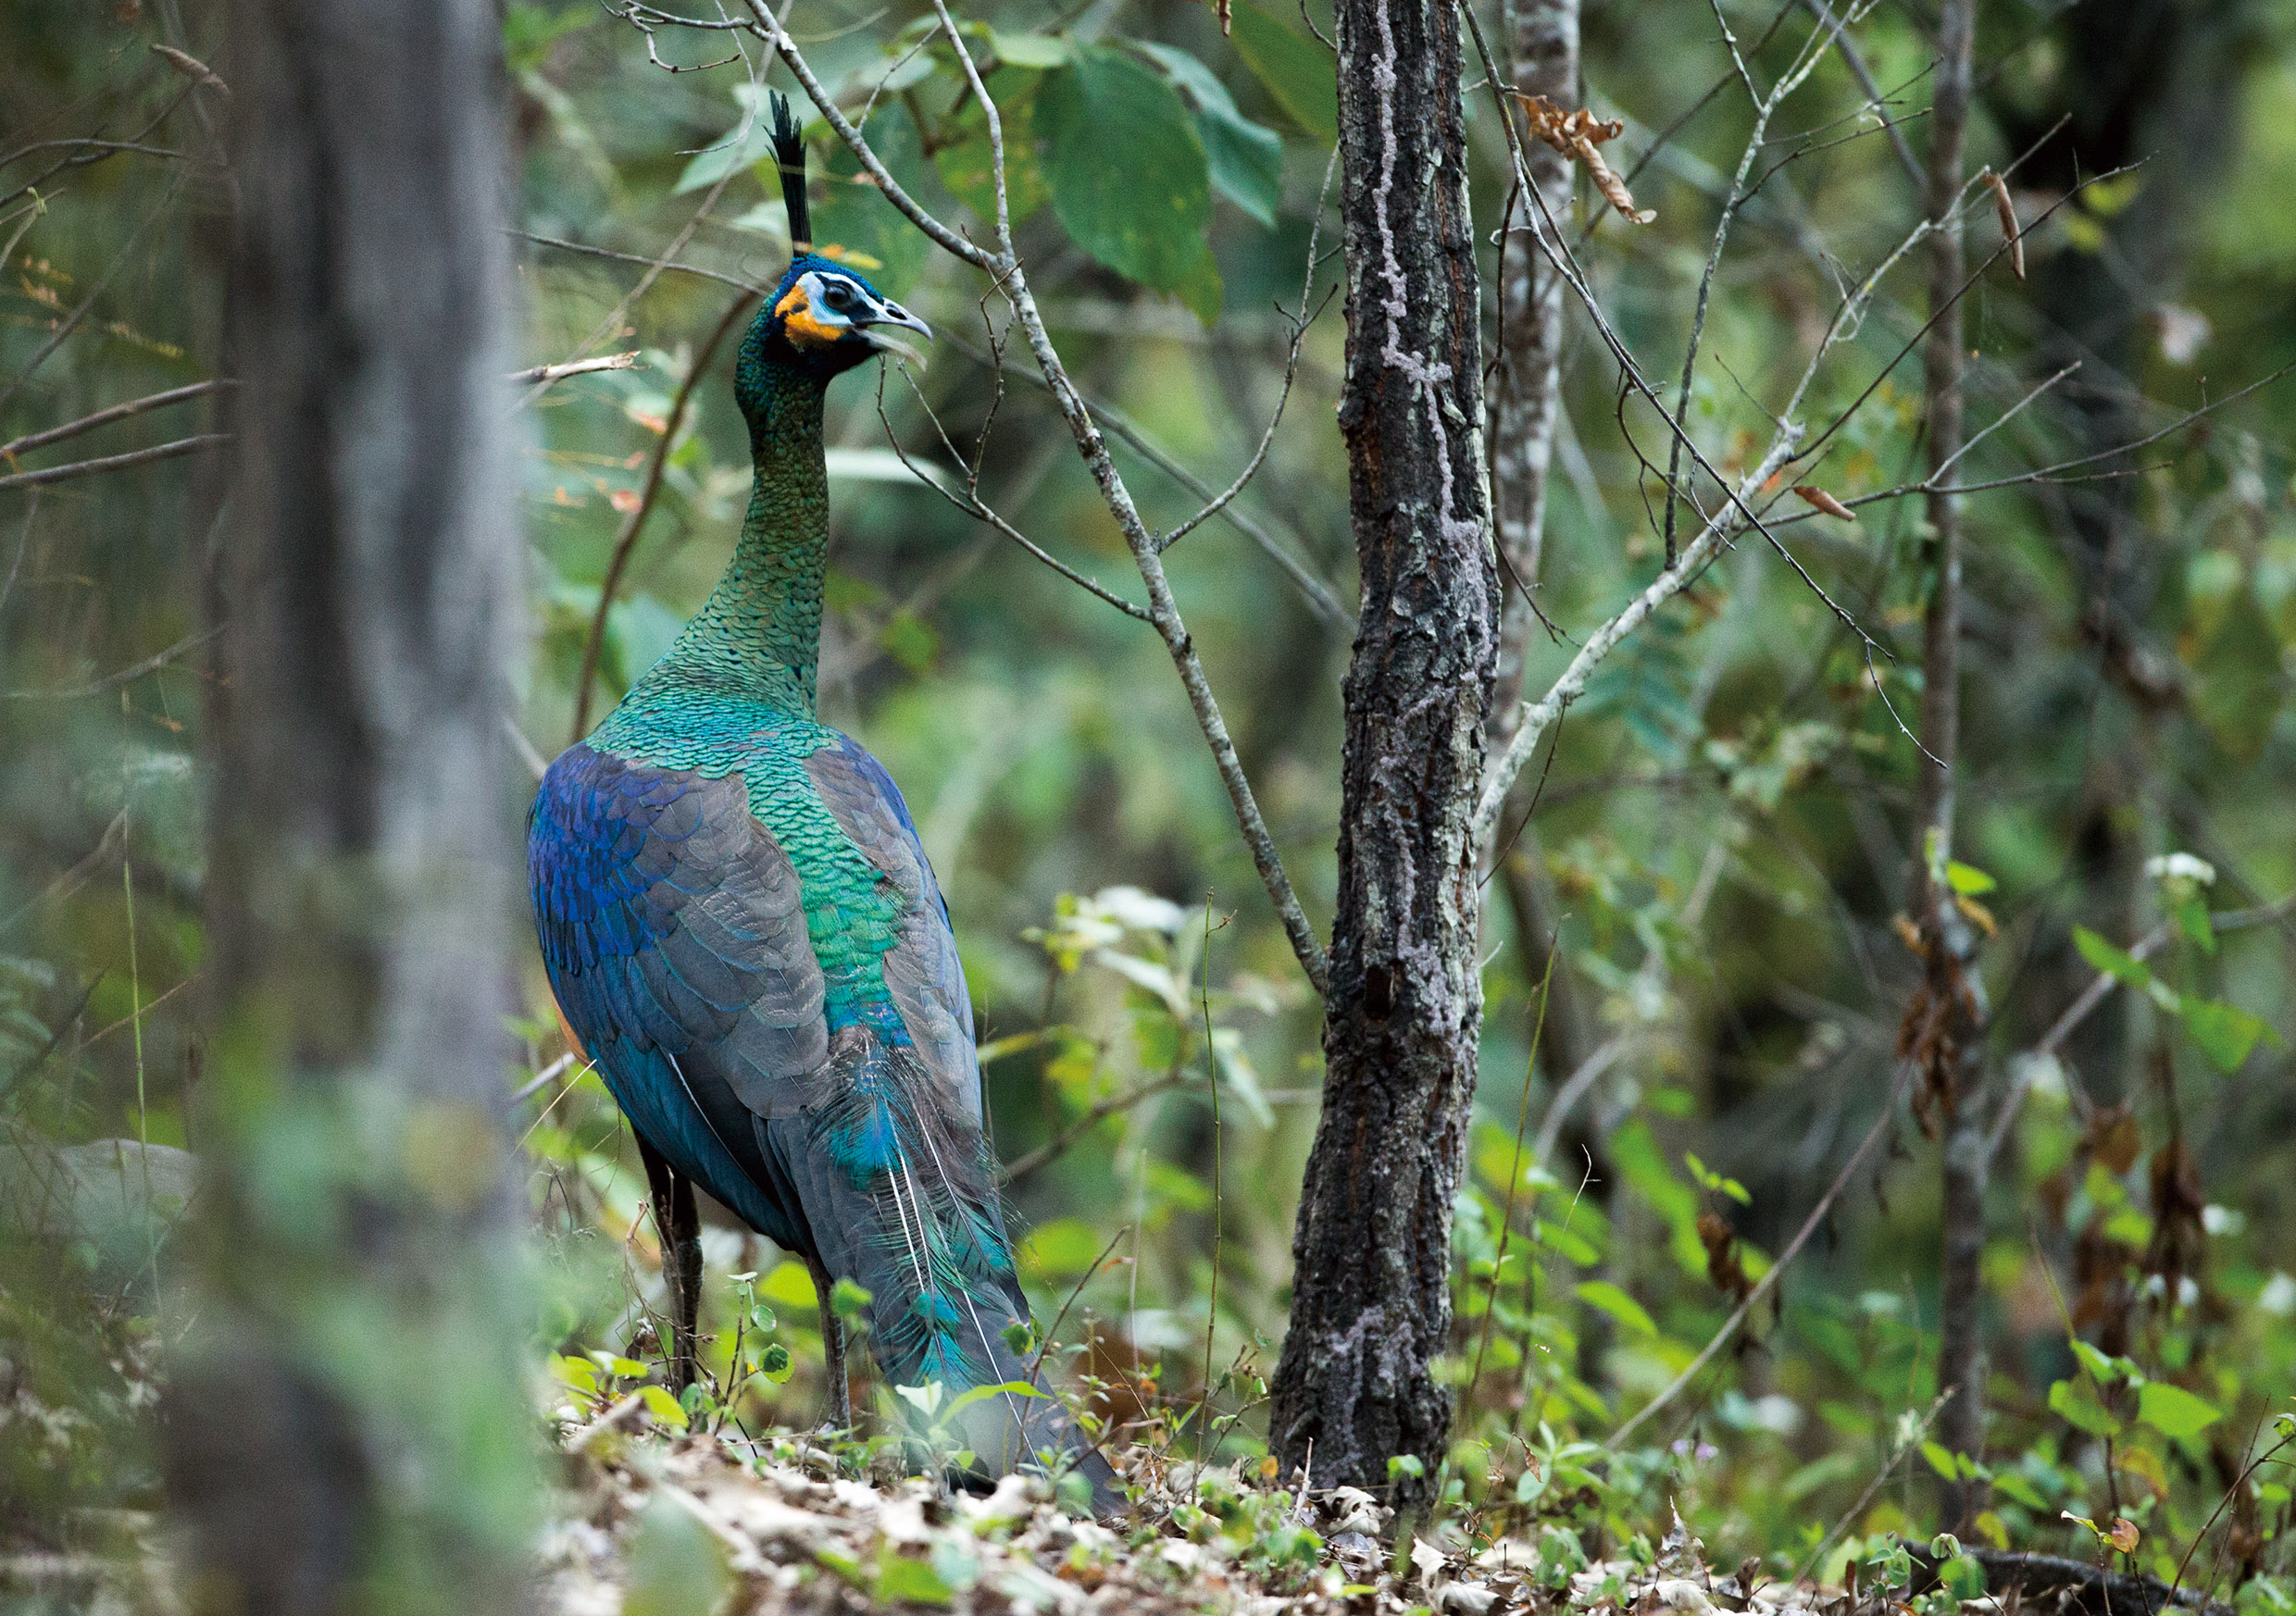 Dam-building threatens endangered green peacock | The Third Pole